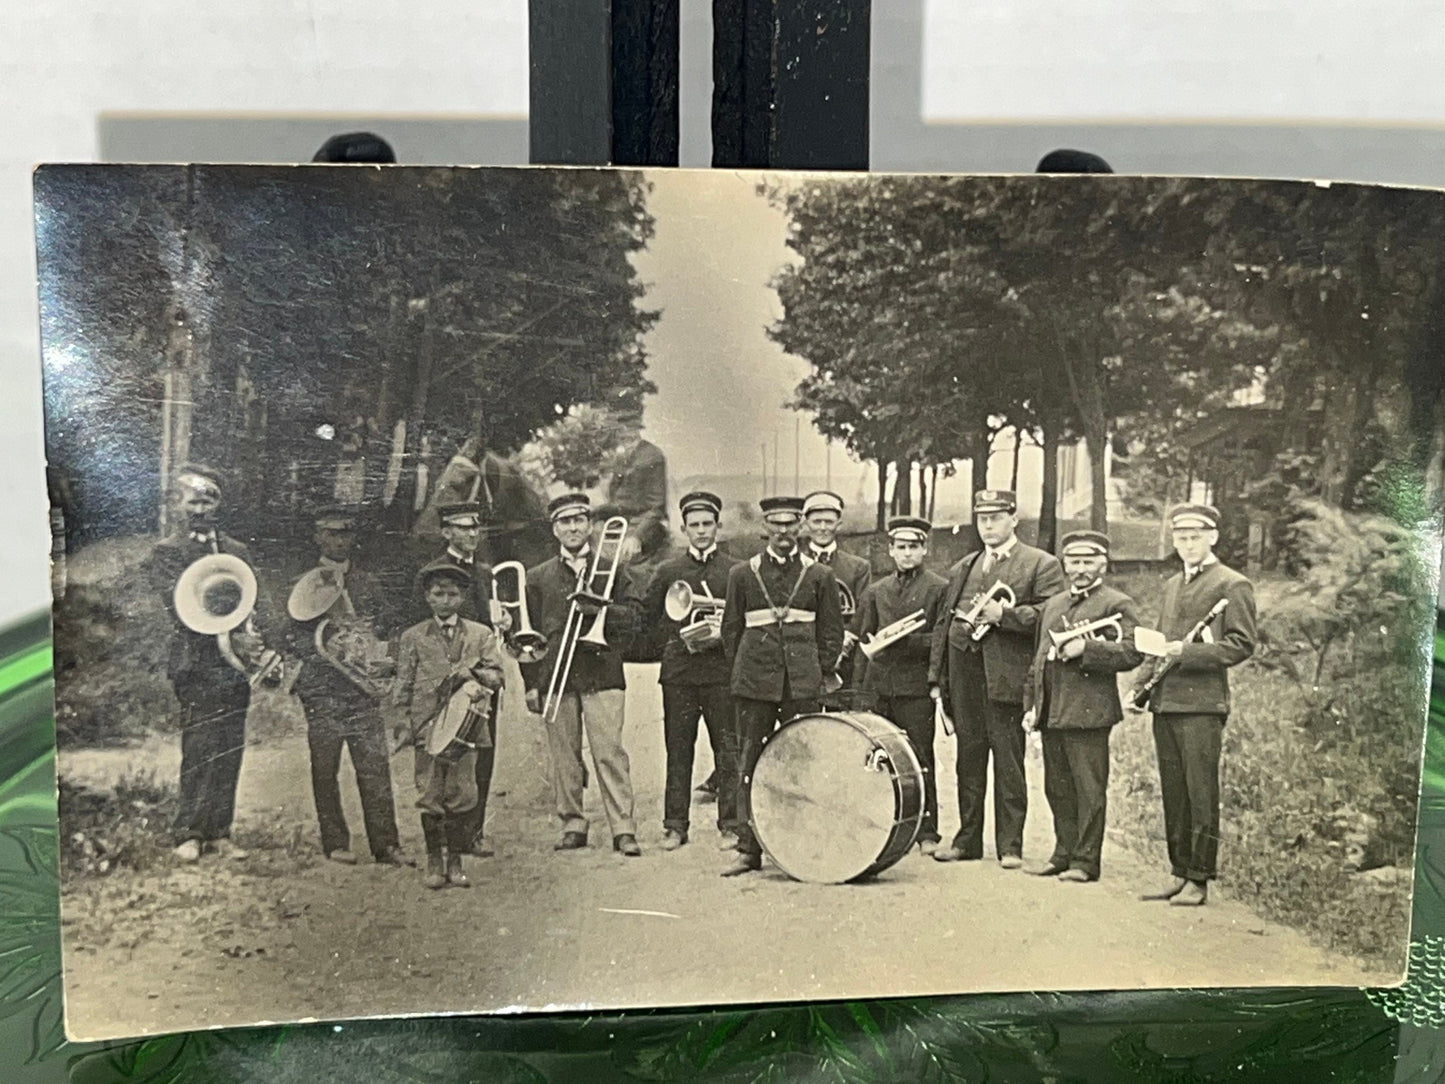 Antique photo real photo postcard music band upstate New York woodhull ny 1900s RPPC